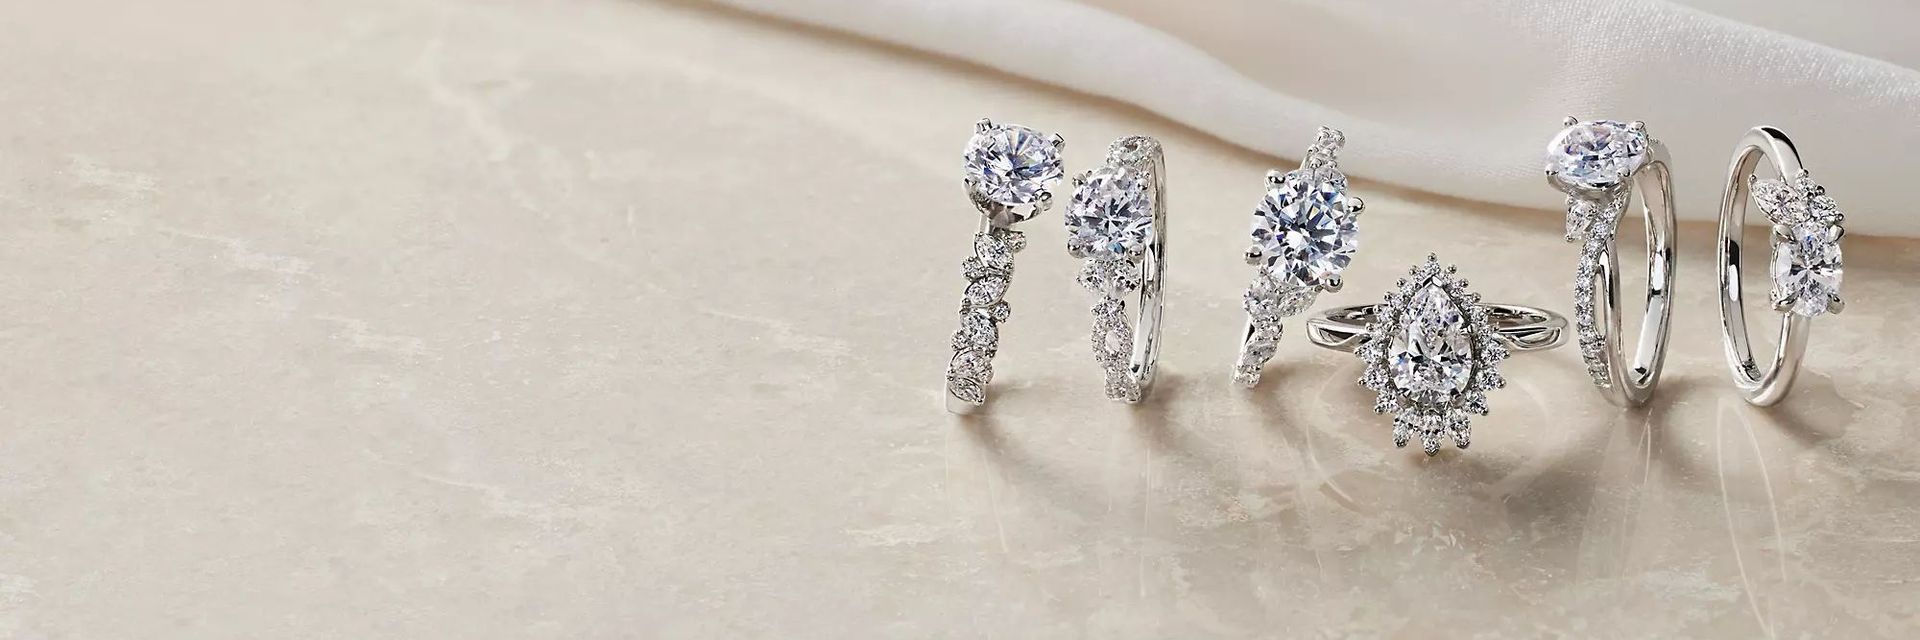 Jewelry by Moon Magic | Quality Gemstone Jewelry | Browse 300+ Designs